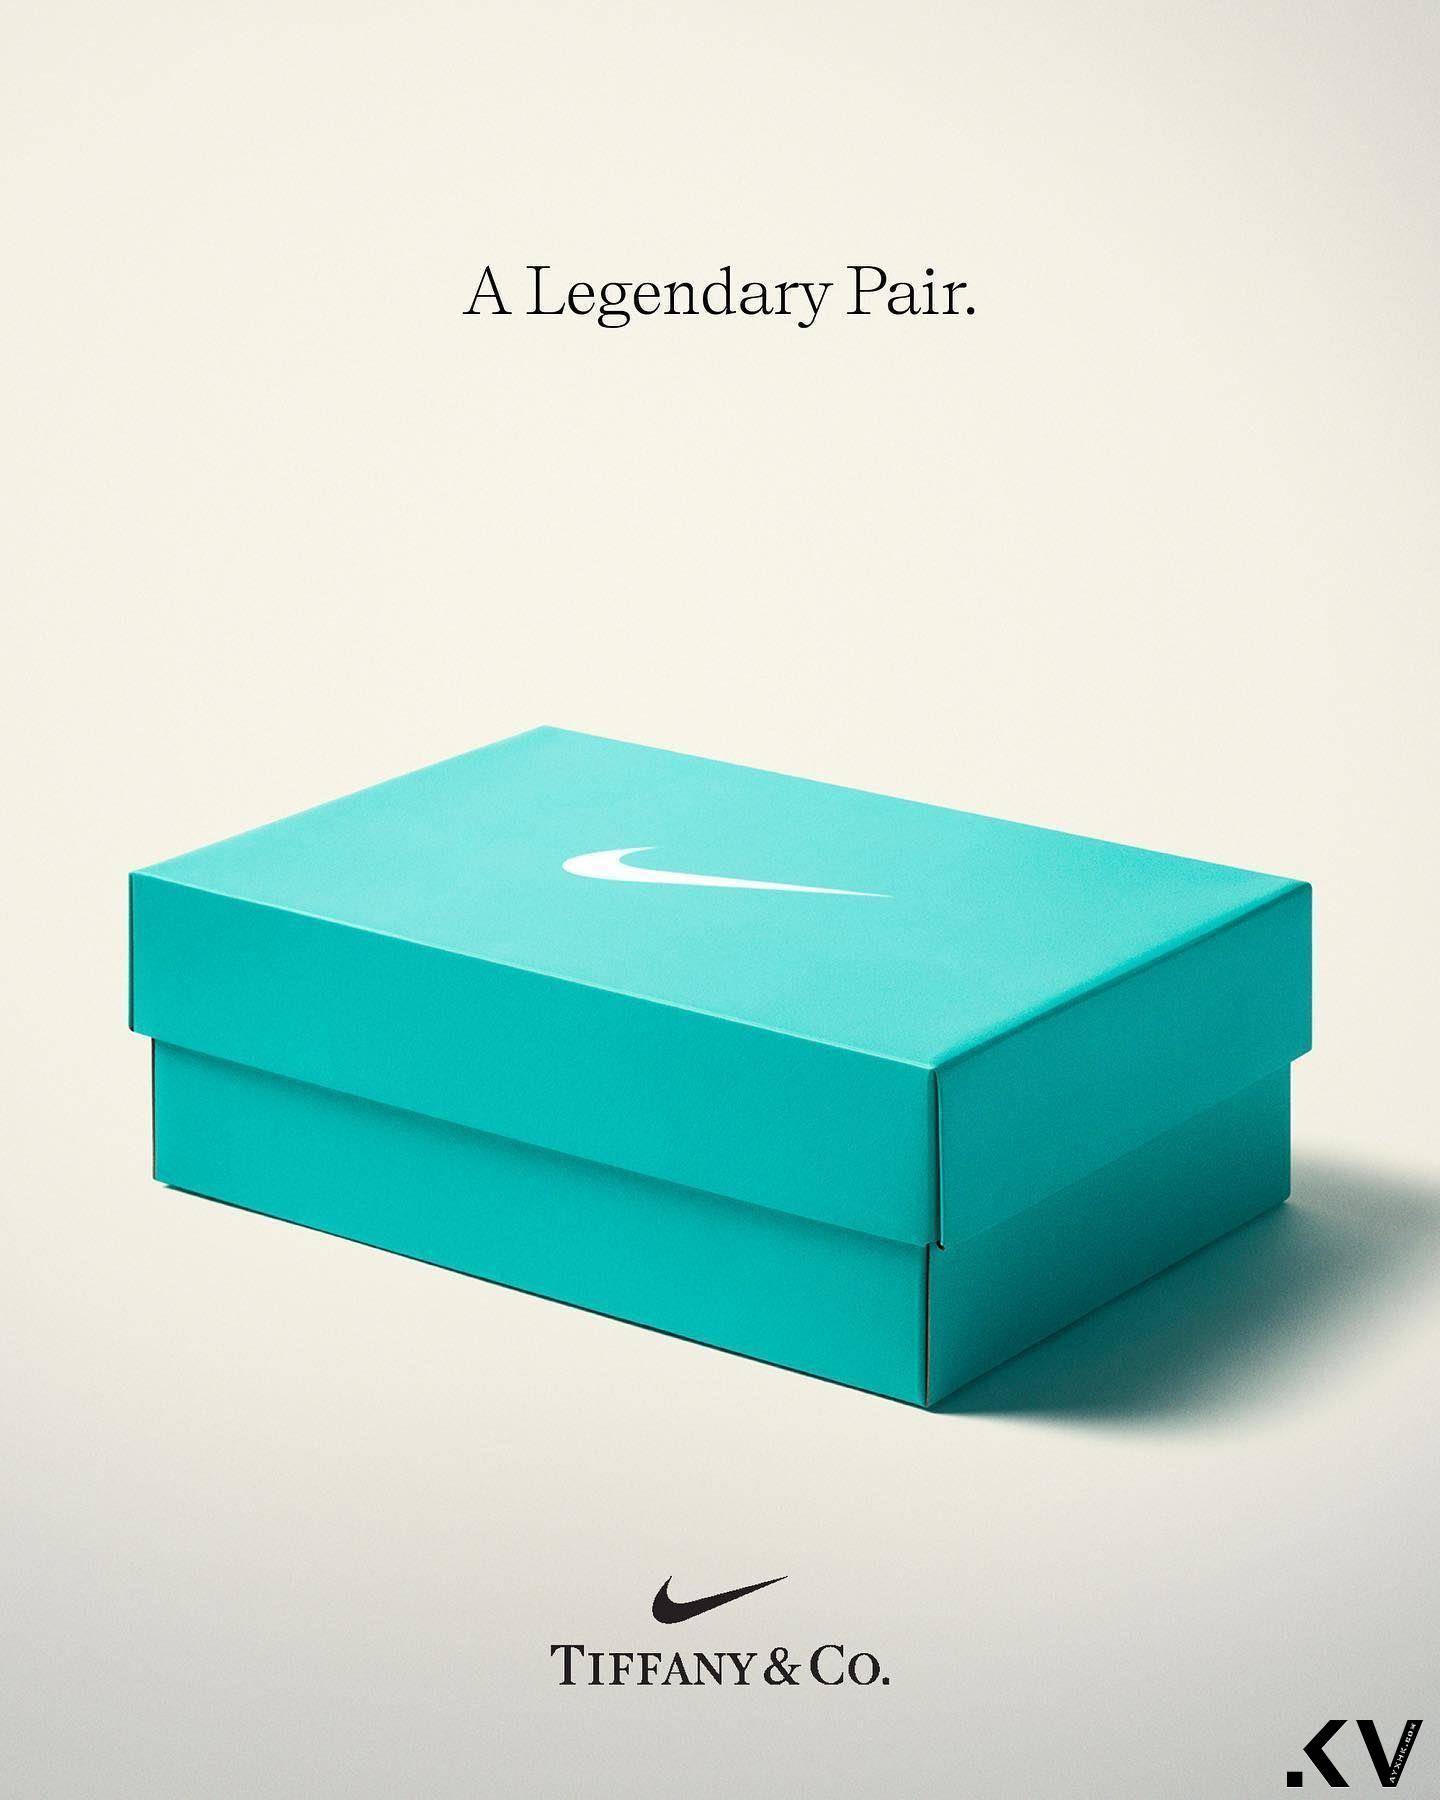 Tiffany x Nike蓝勾鞋即将亮相　网友兴奋“我买得起” 时尚穿搭 图1张